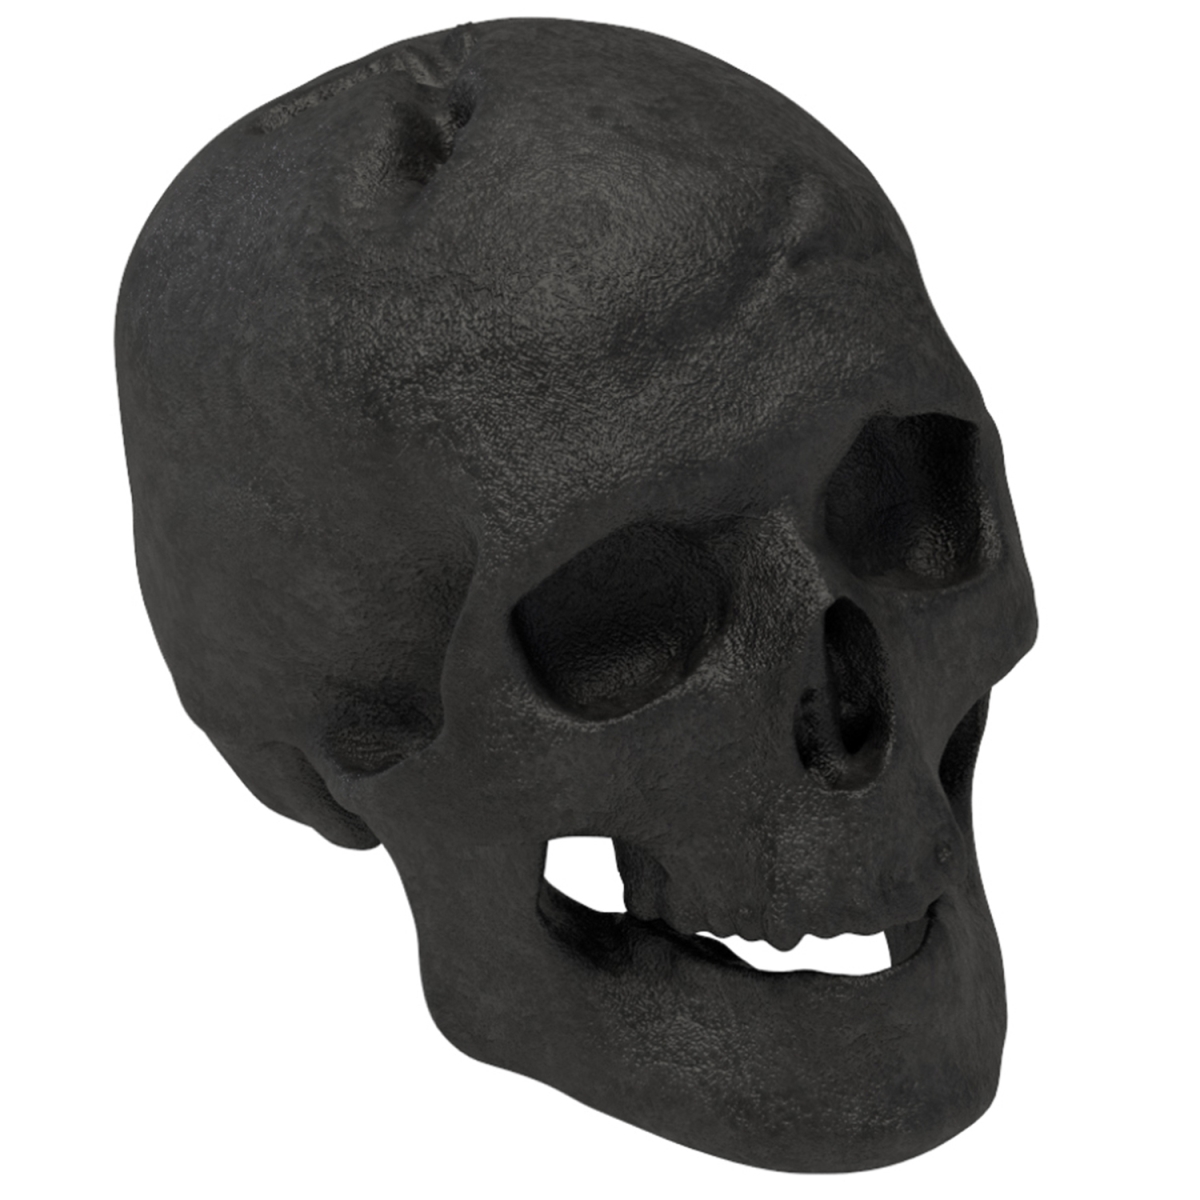 Regal Flame RFA6004 Human Skull Ceramic Wood Large Gas Fireplace Logs Halloween Decor&#44; Black - 7.1 x 6.3 x 5.9 in.